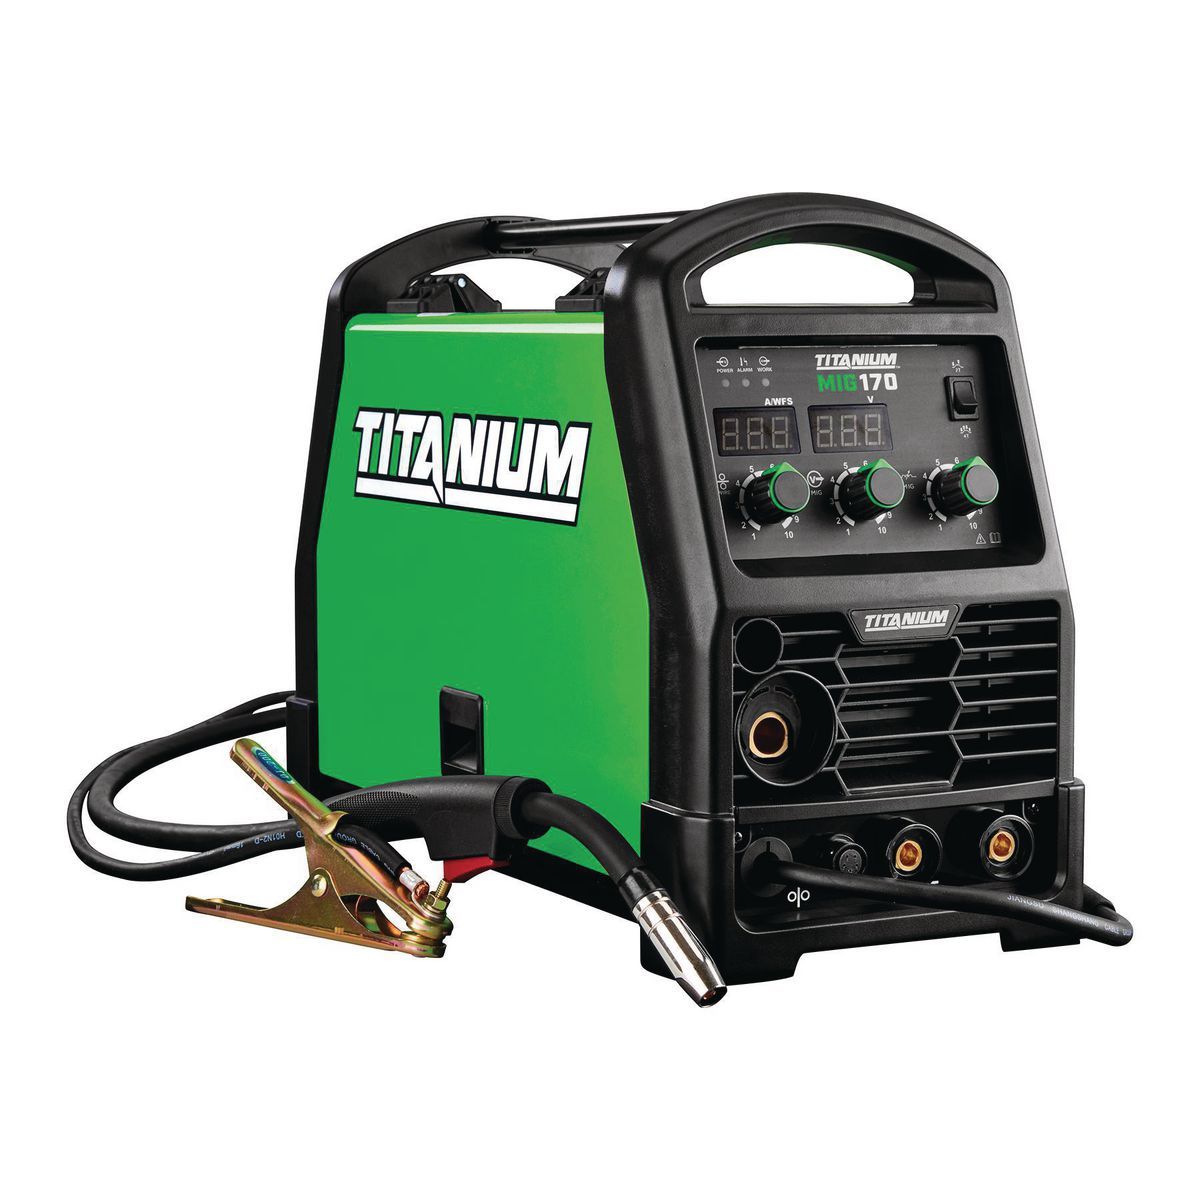 TITANIUM MIG 170 Professional Welder with 120/240V Input